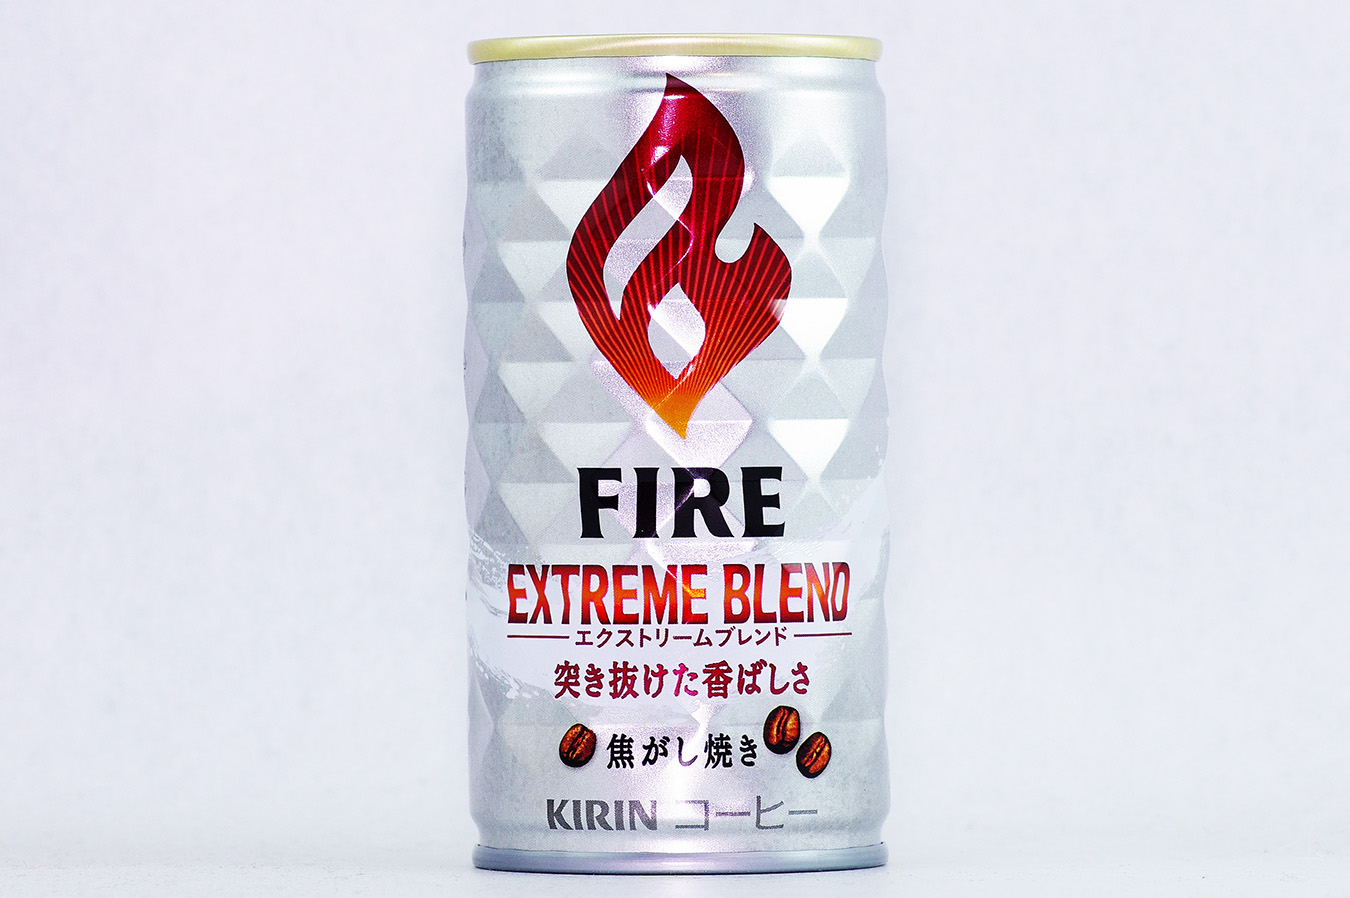 FIRE エクストリームブレンド 自販機版 2016年10月